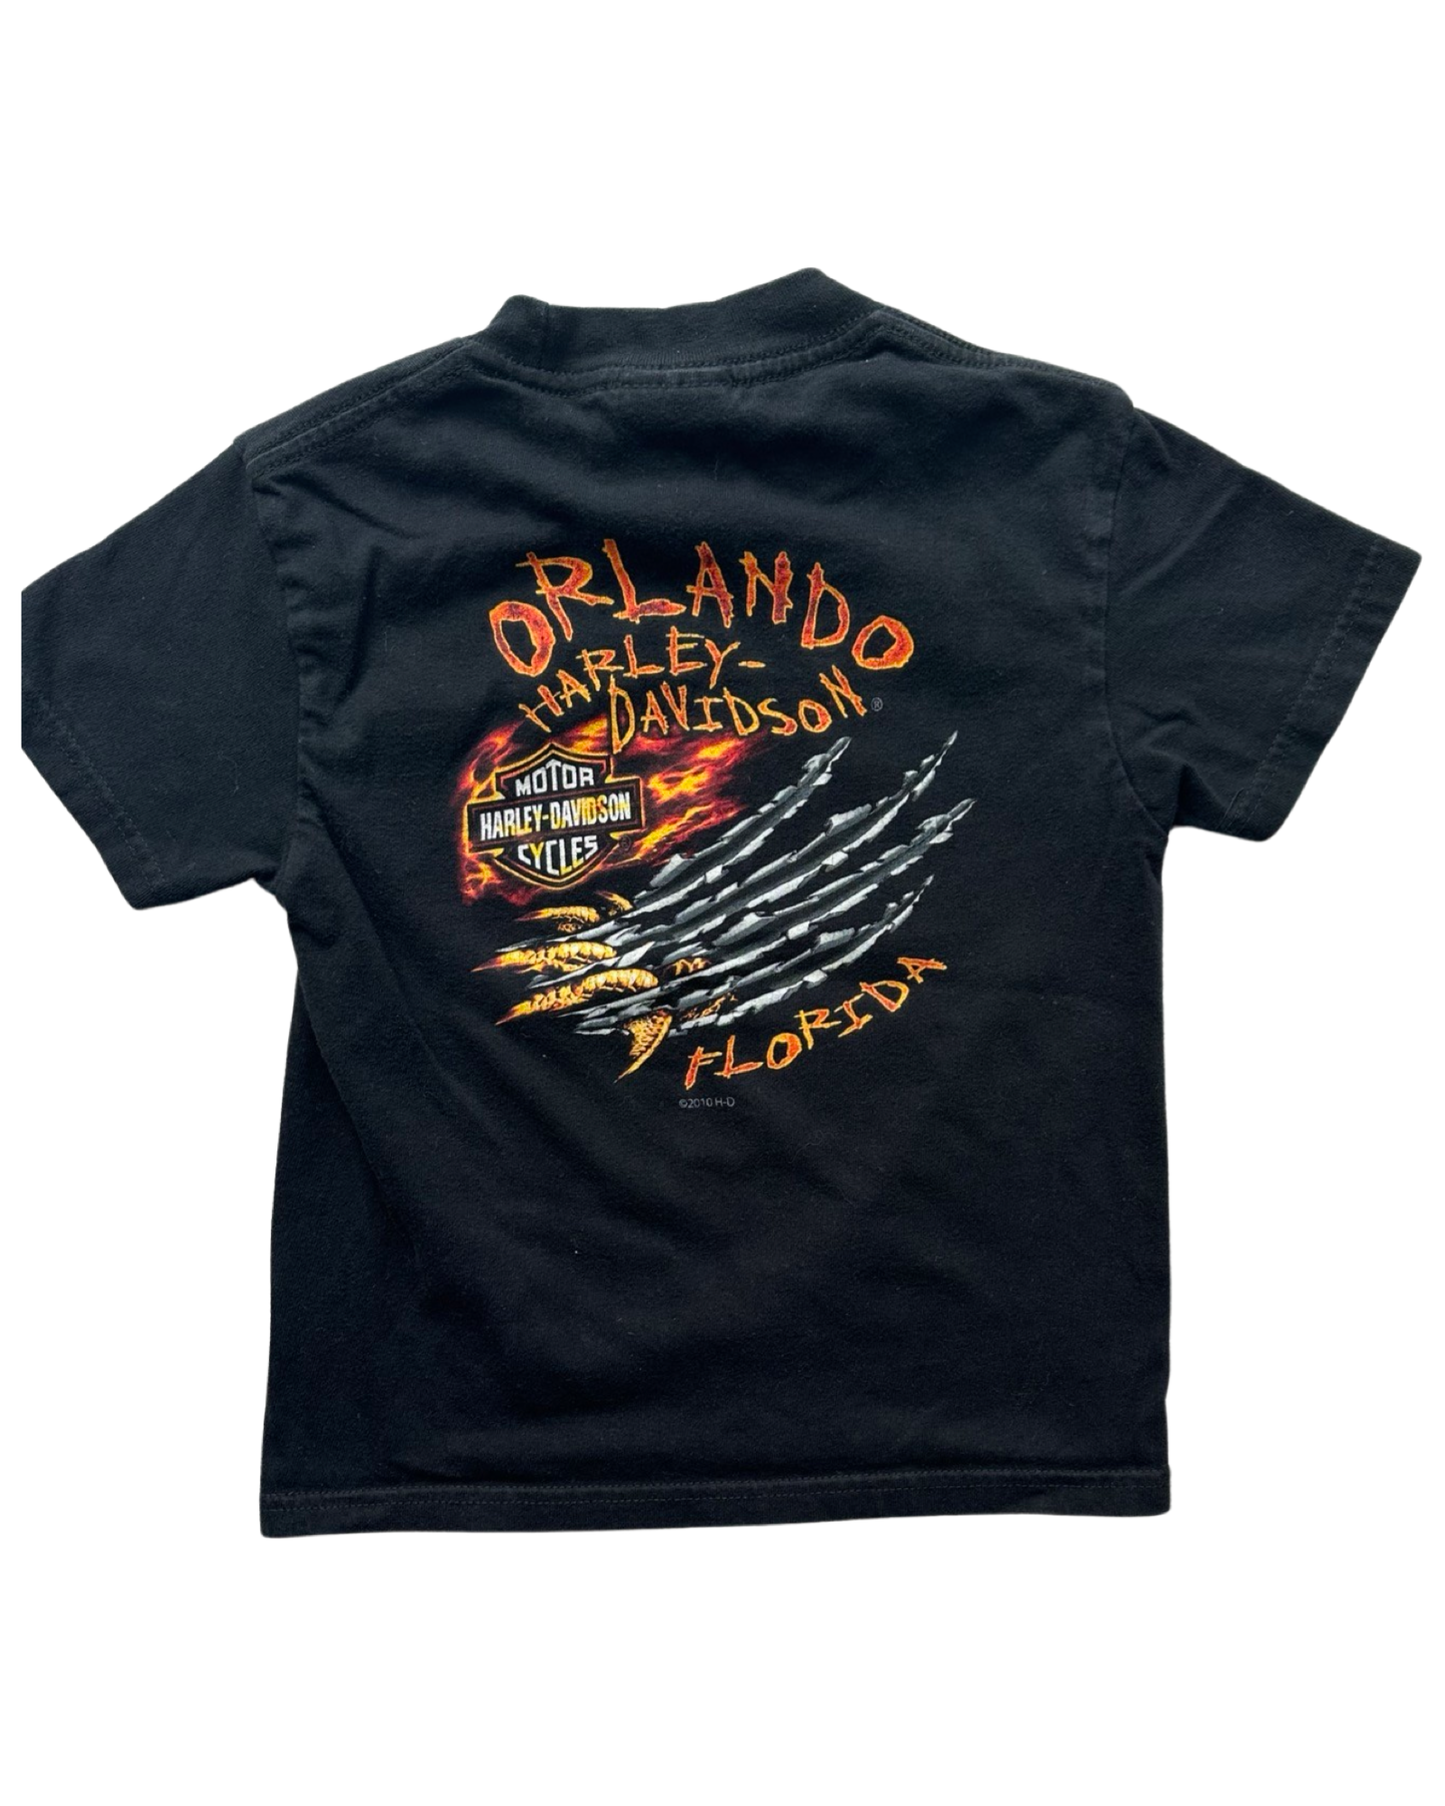 Harley Davidson Orlando flames t shirt (3-4yrs)